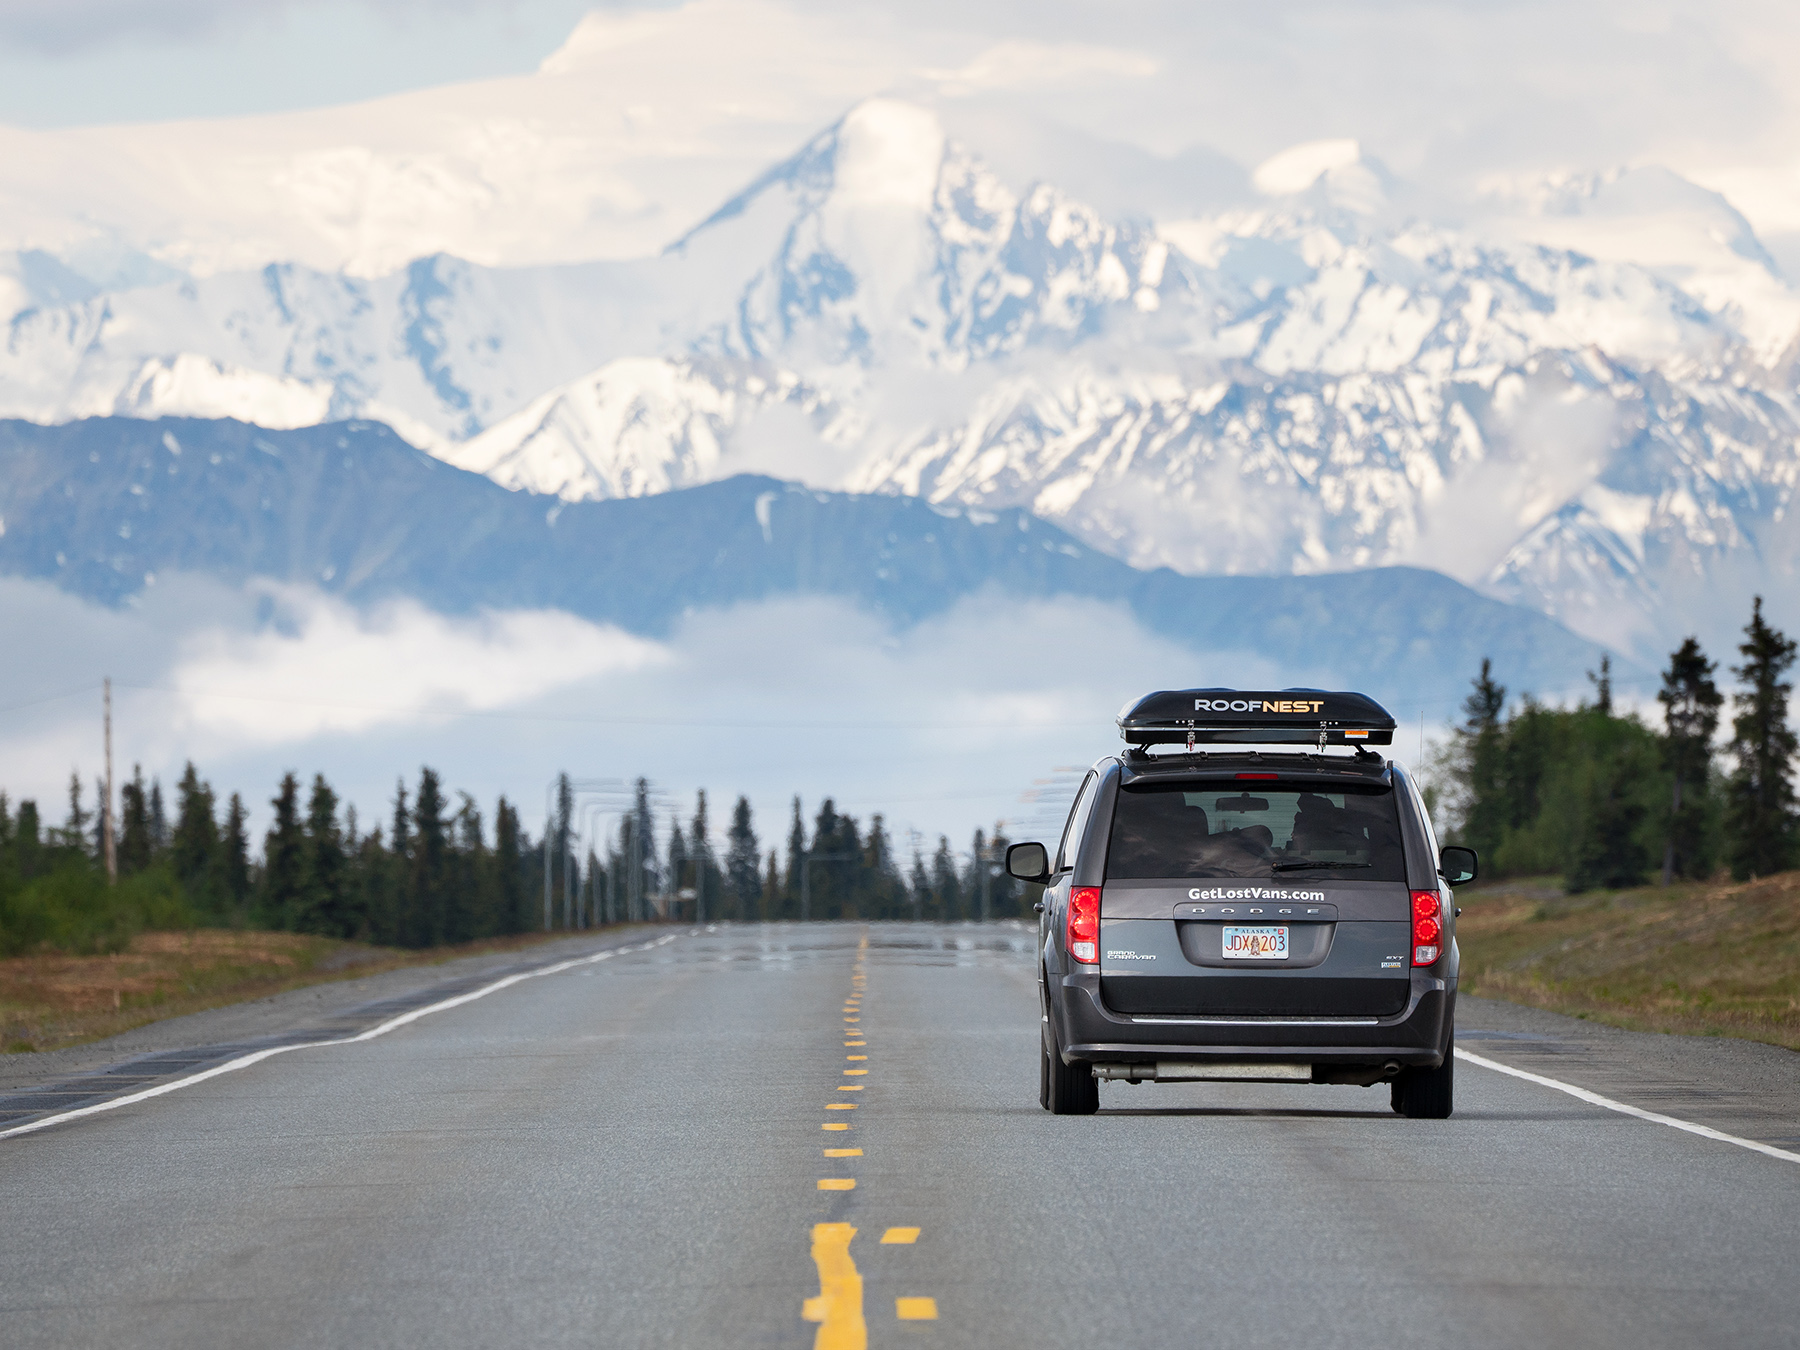 How to Plan an Alaska Road Trip - Get Lost Travel Vans